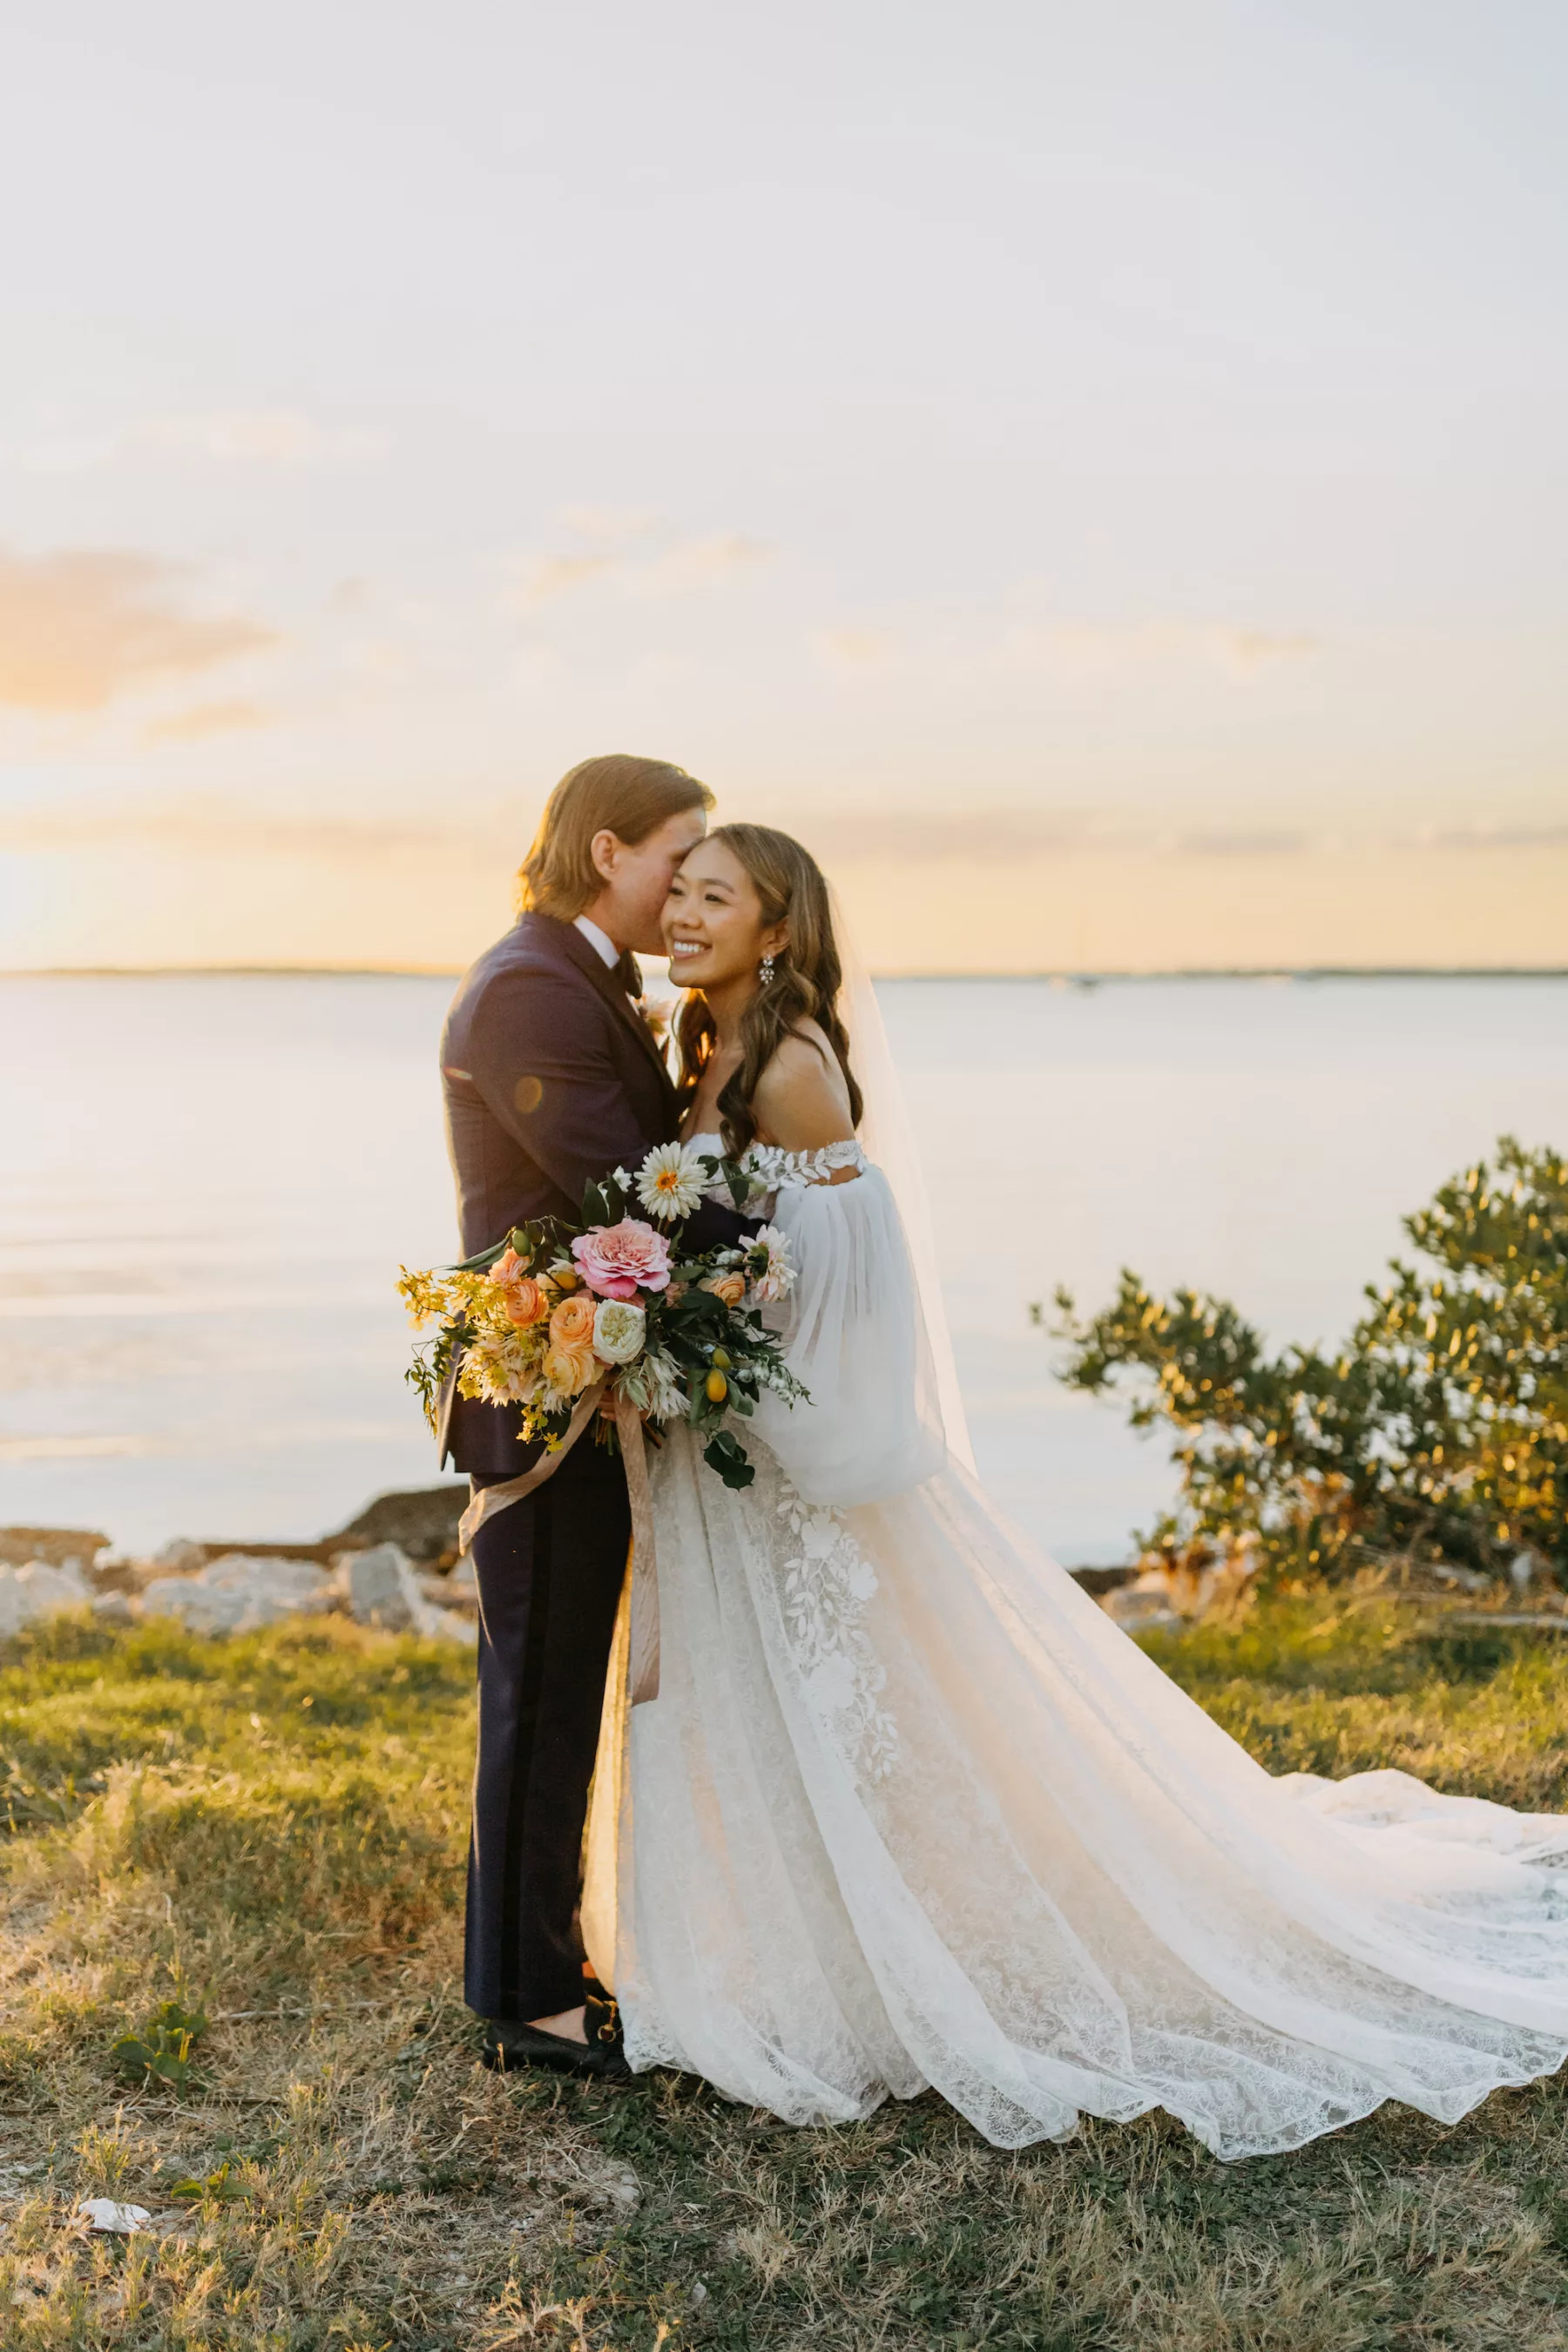 Romantic Sunset Bride and Groom Wedding Portrait | Tampa Bay Photographer Amber McWhorter Photography | Planner Coastal Coordinating